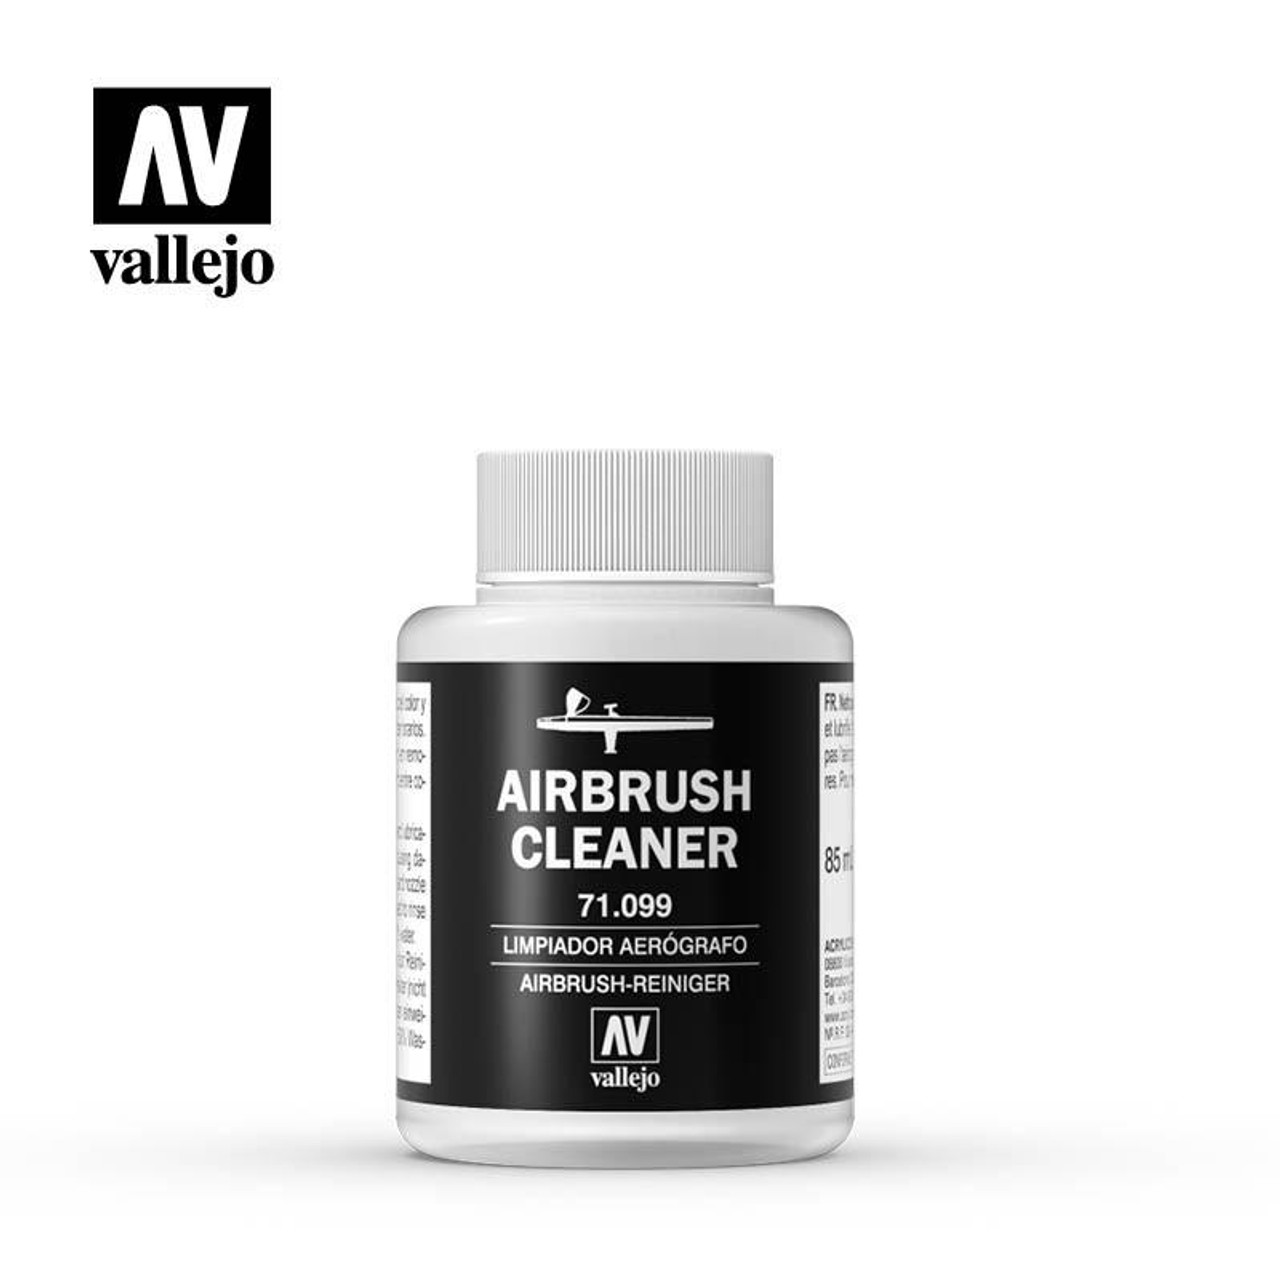 Vallejo Airbrush Flow Improver (60ml), Airbrush Improver, Model Air